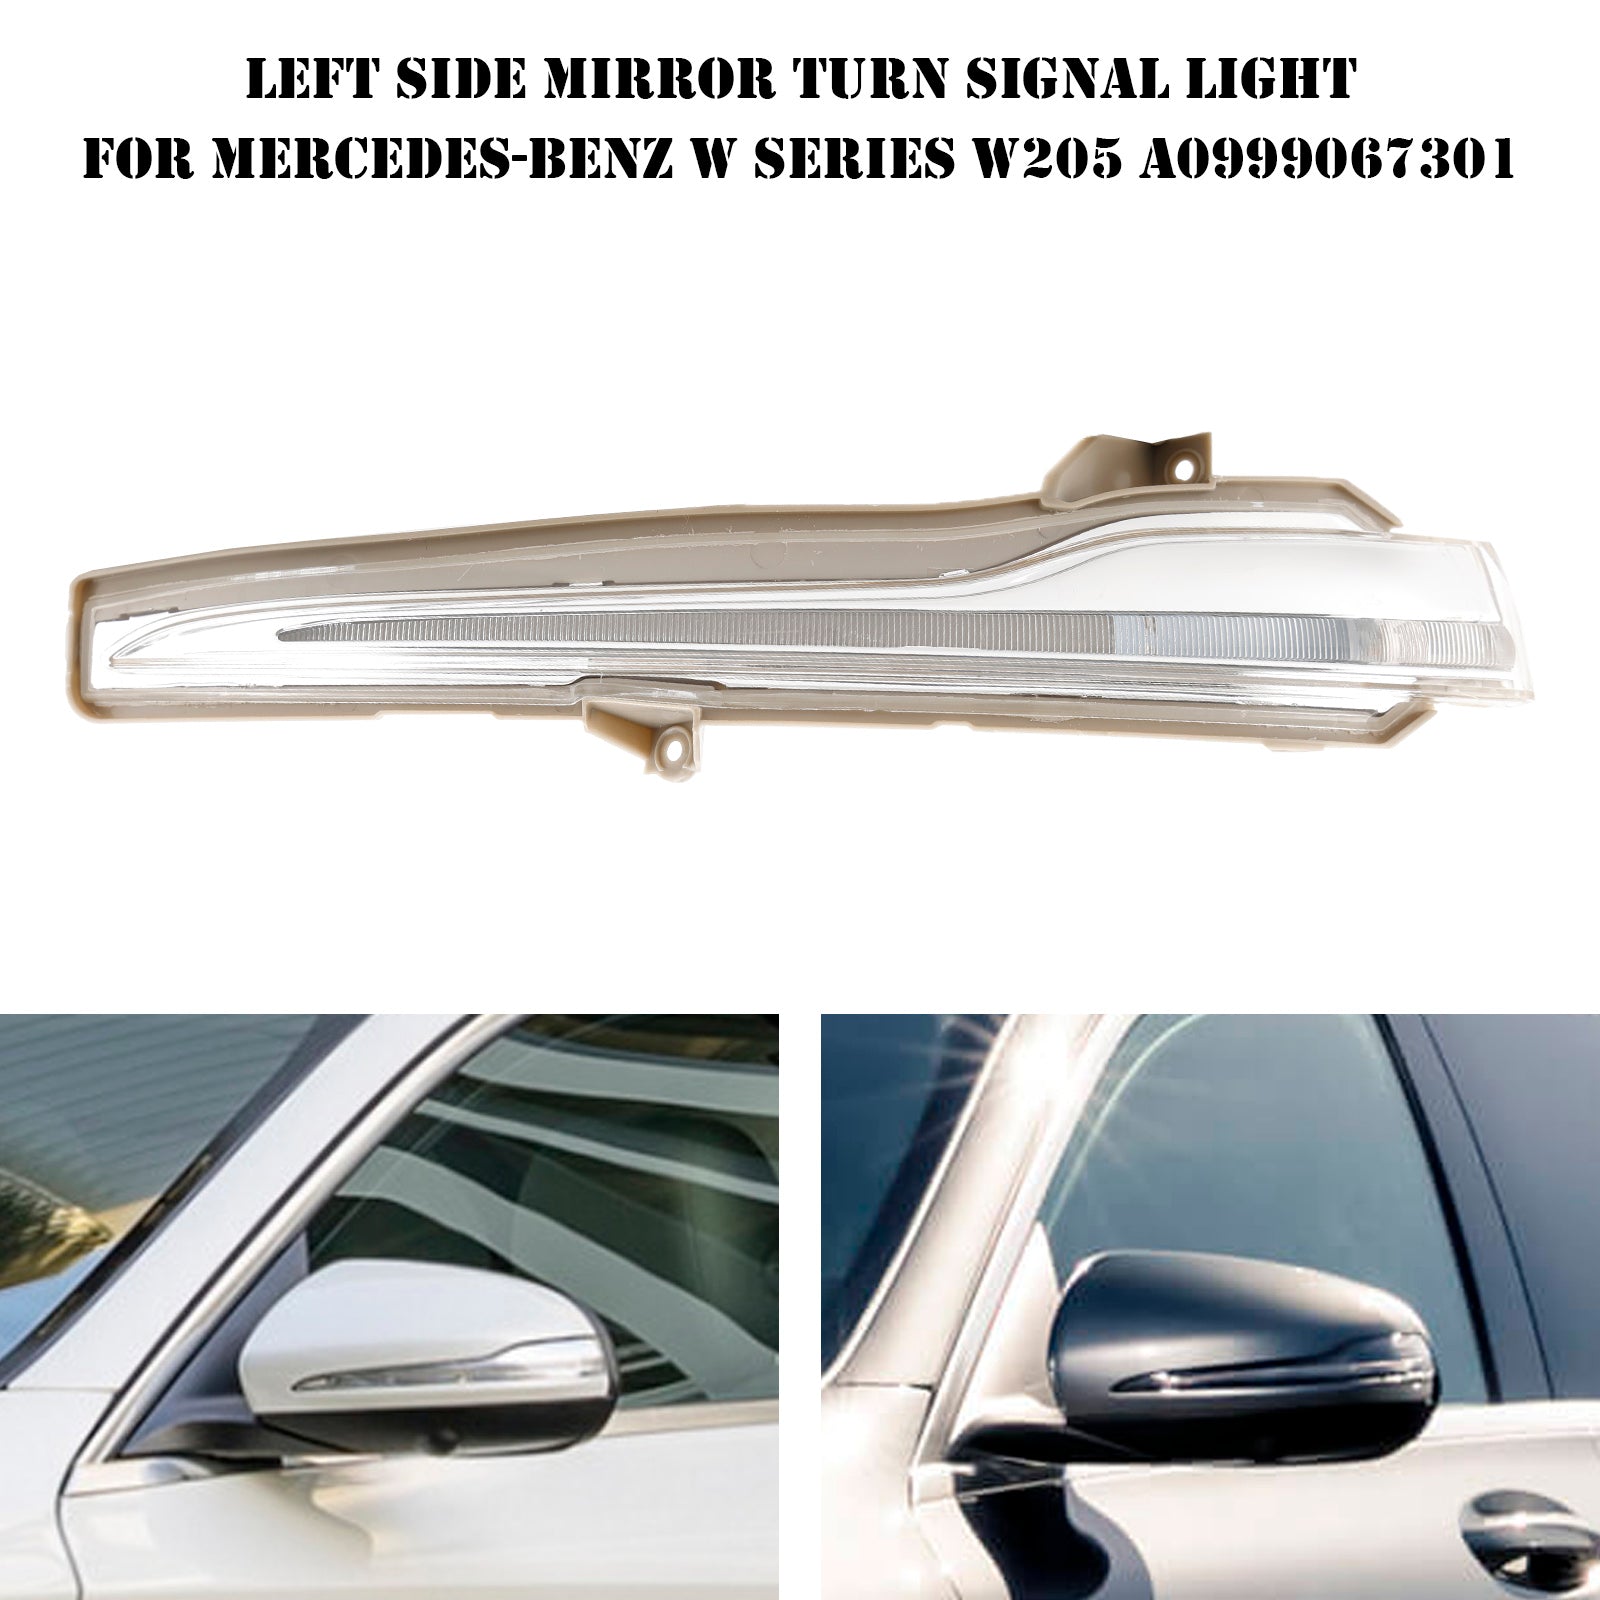 Luz intermitente de espejo lateral derecho para Mercedes-Benz Serie W W205 A0999067401